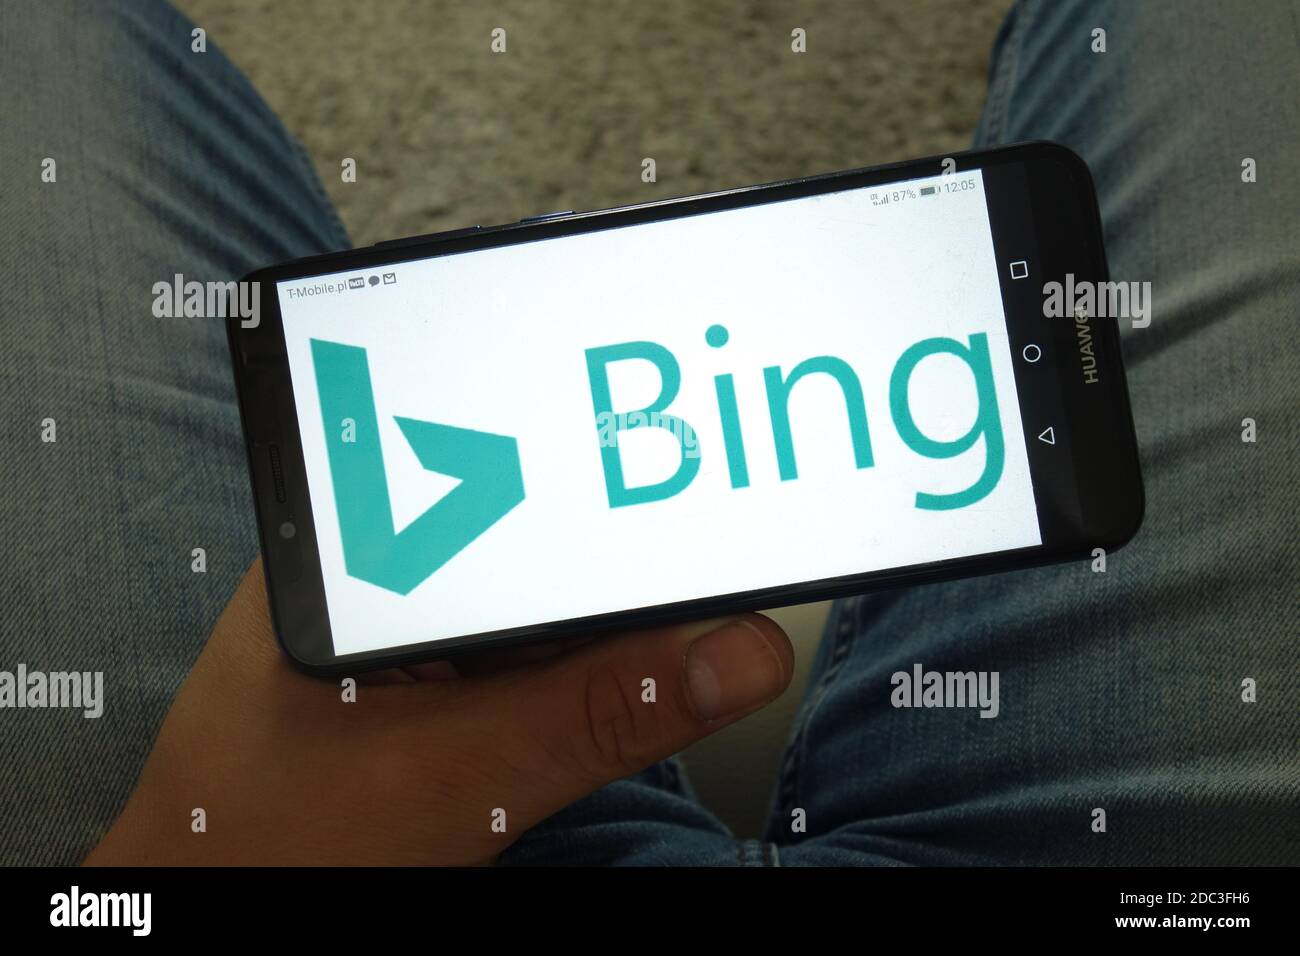 Sibblingz puts social games inside Microsoft's Bing search engine